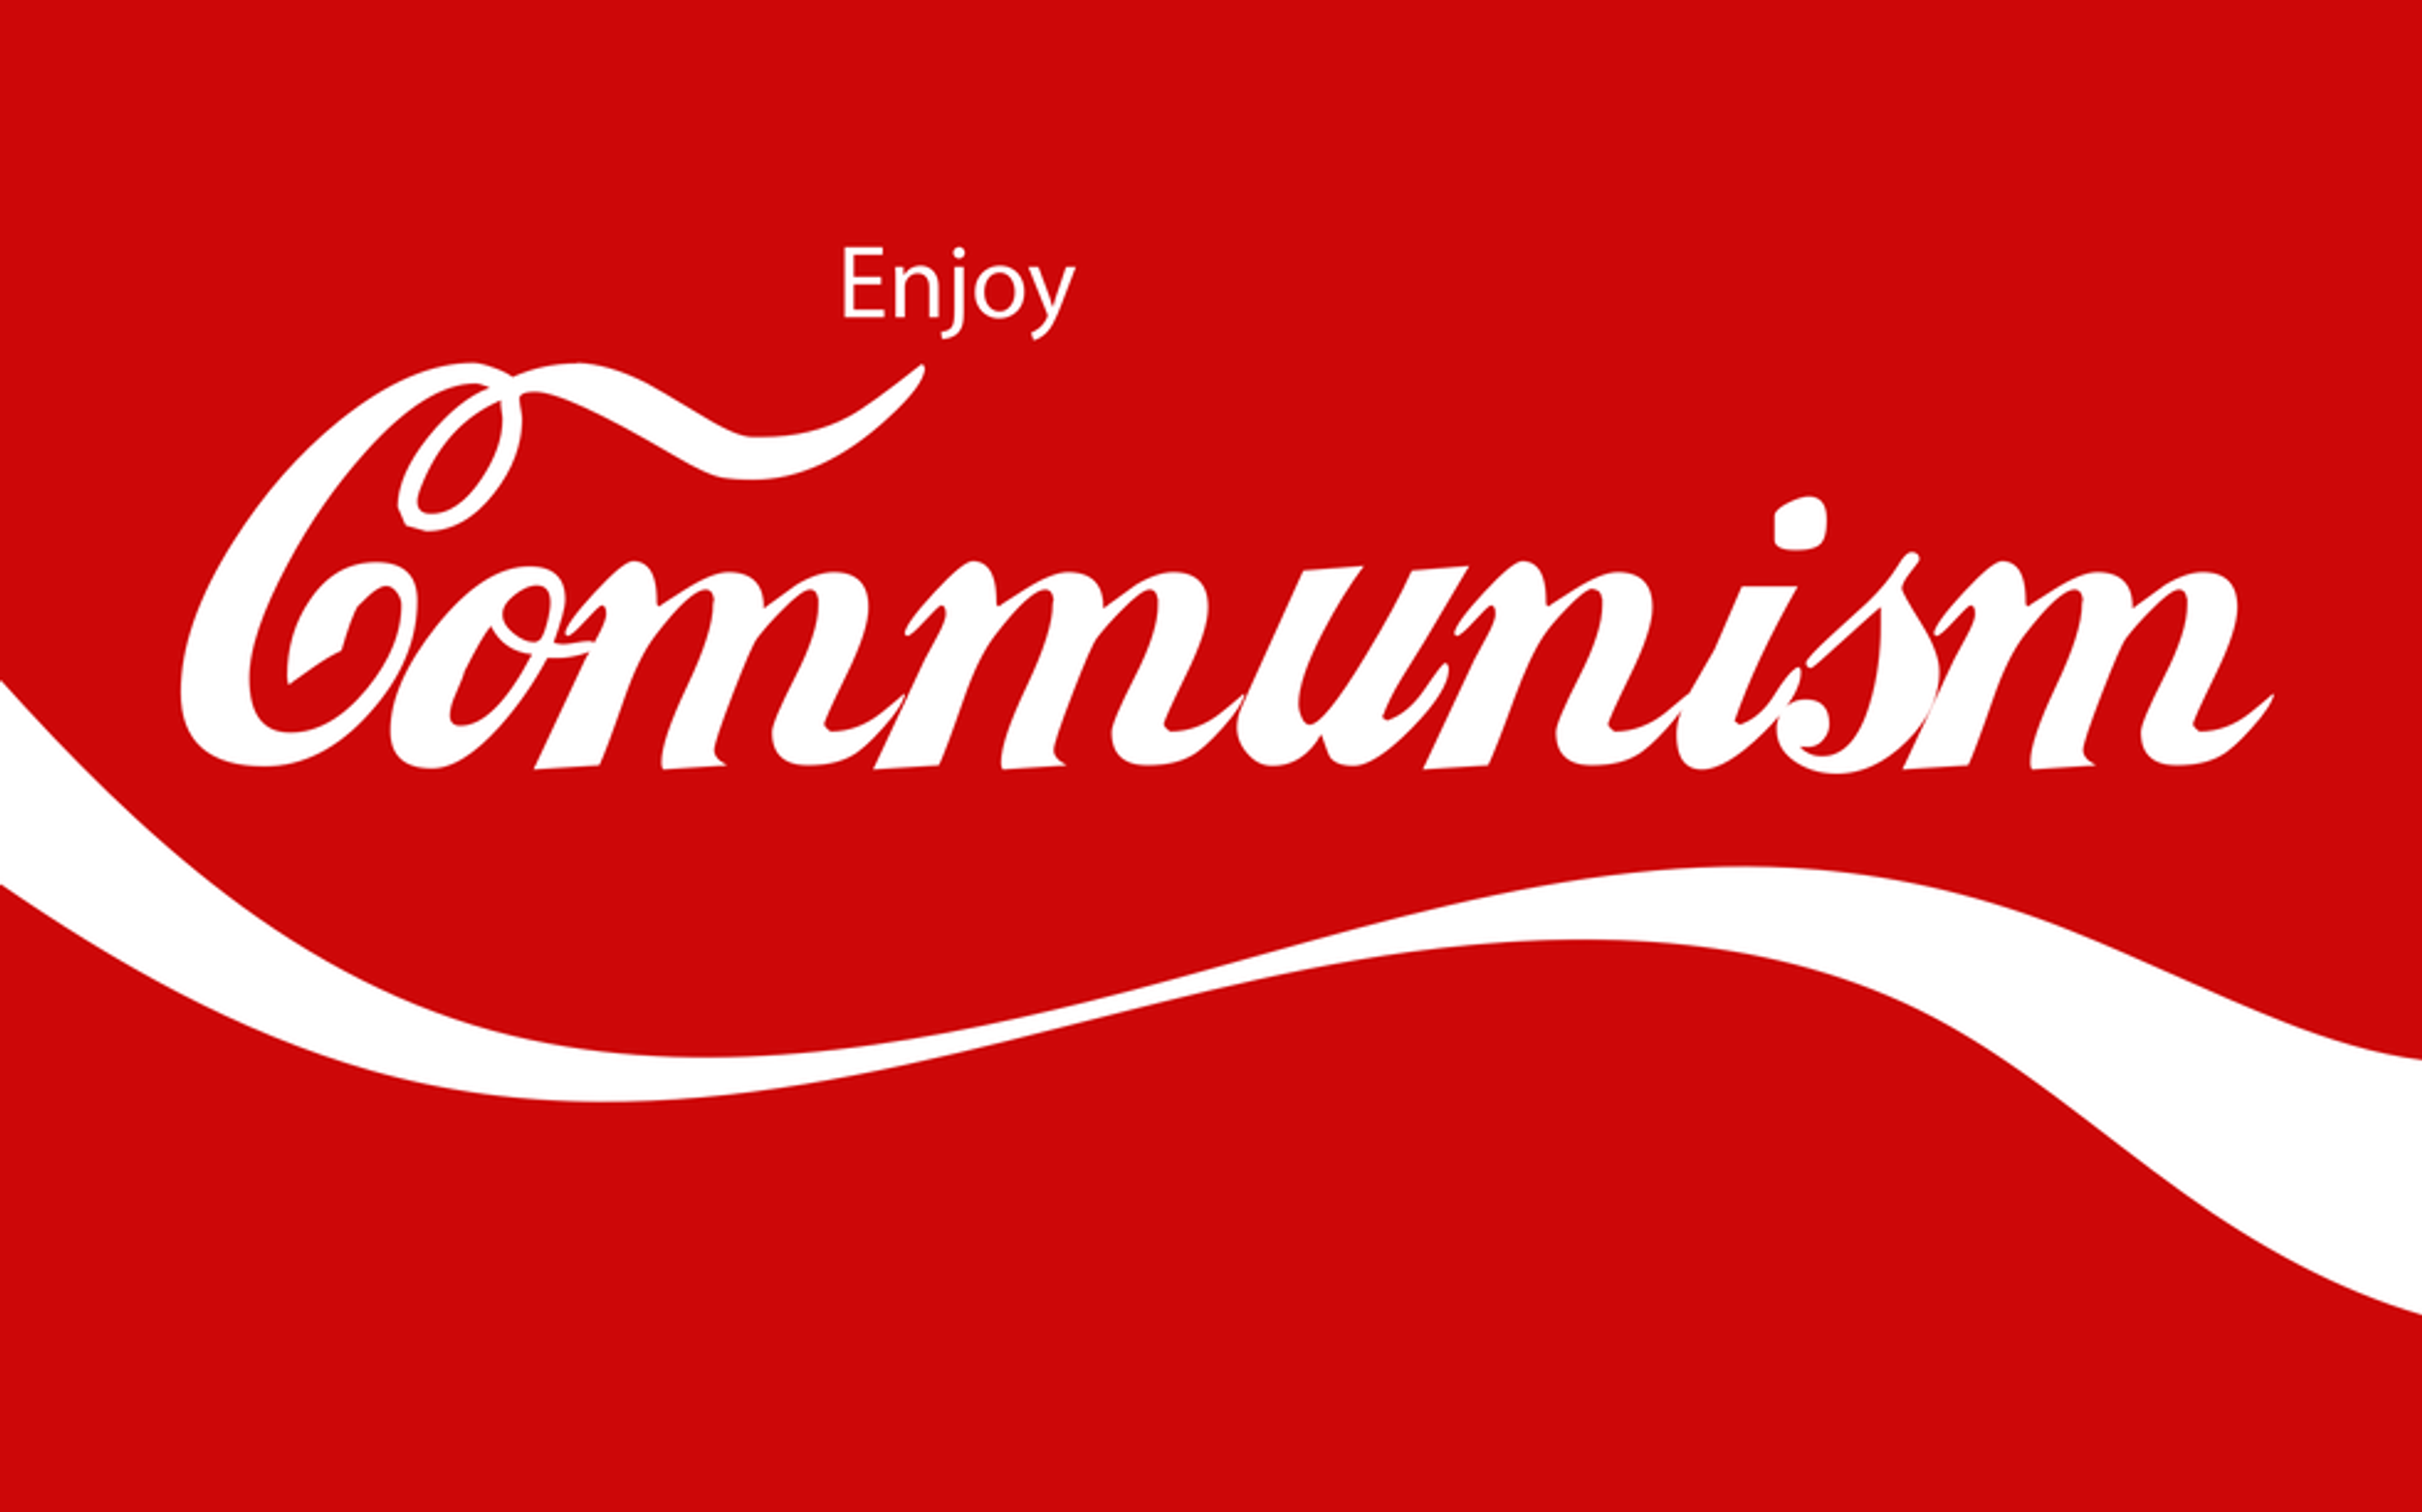 Why I Am A Communist